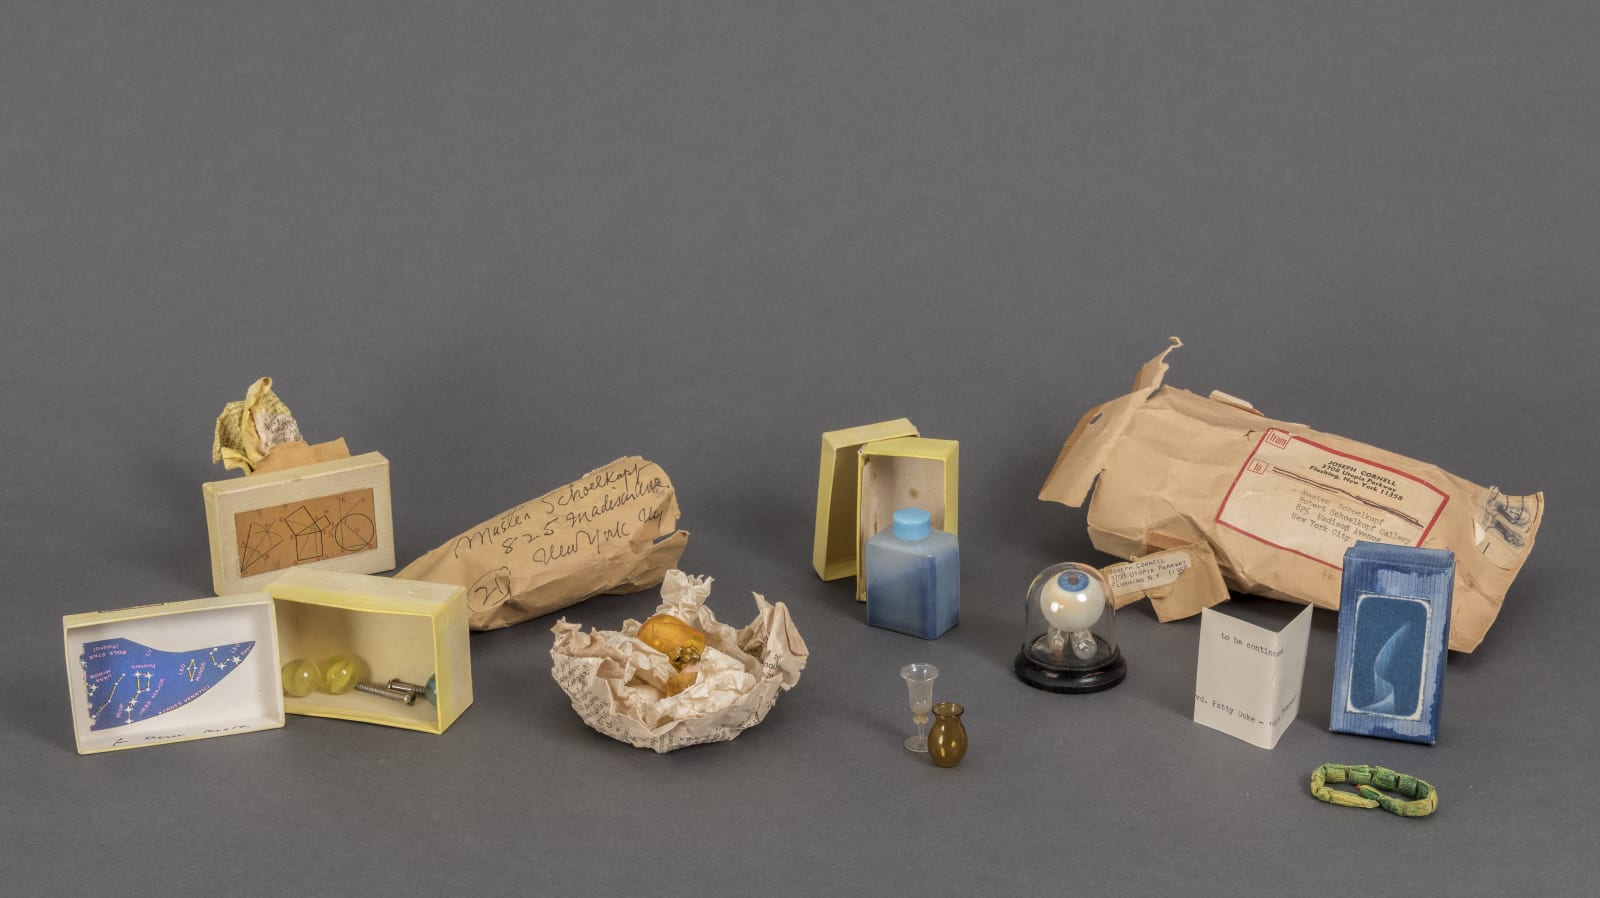 Joseph Cornell, Untitled (Found Objects), 1962